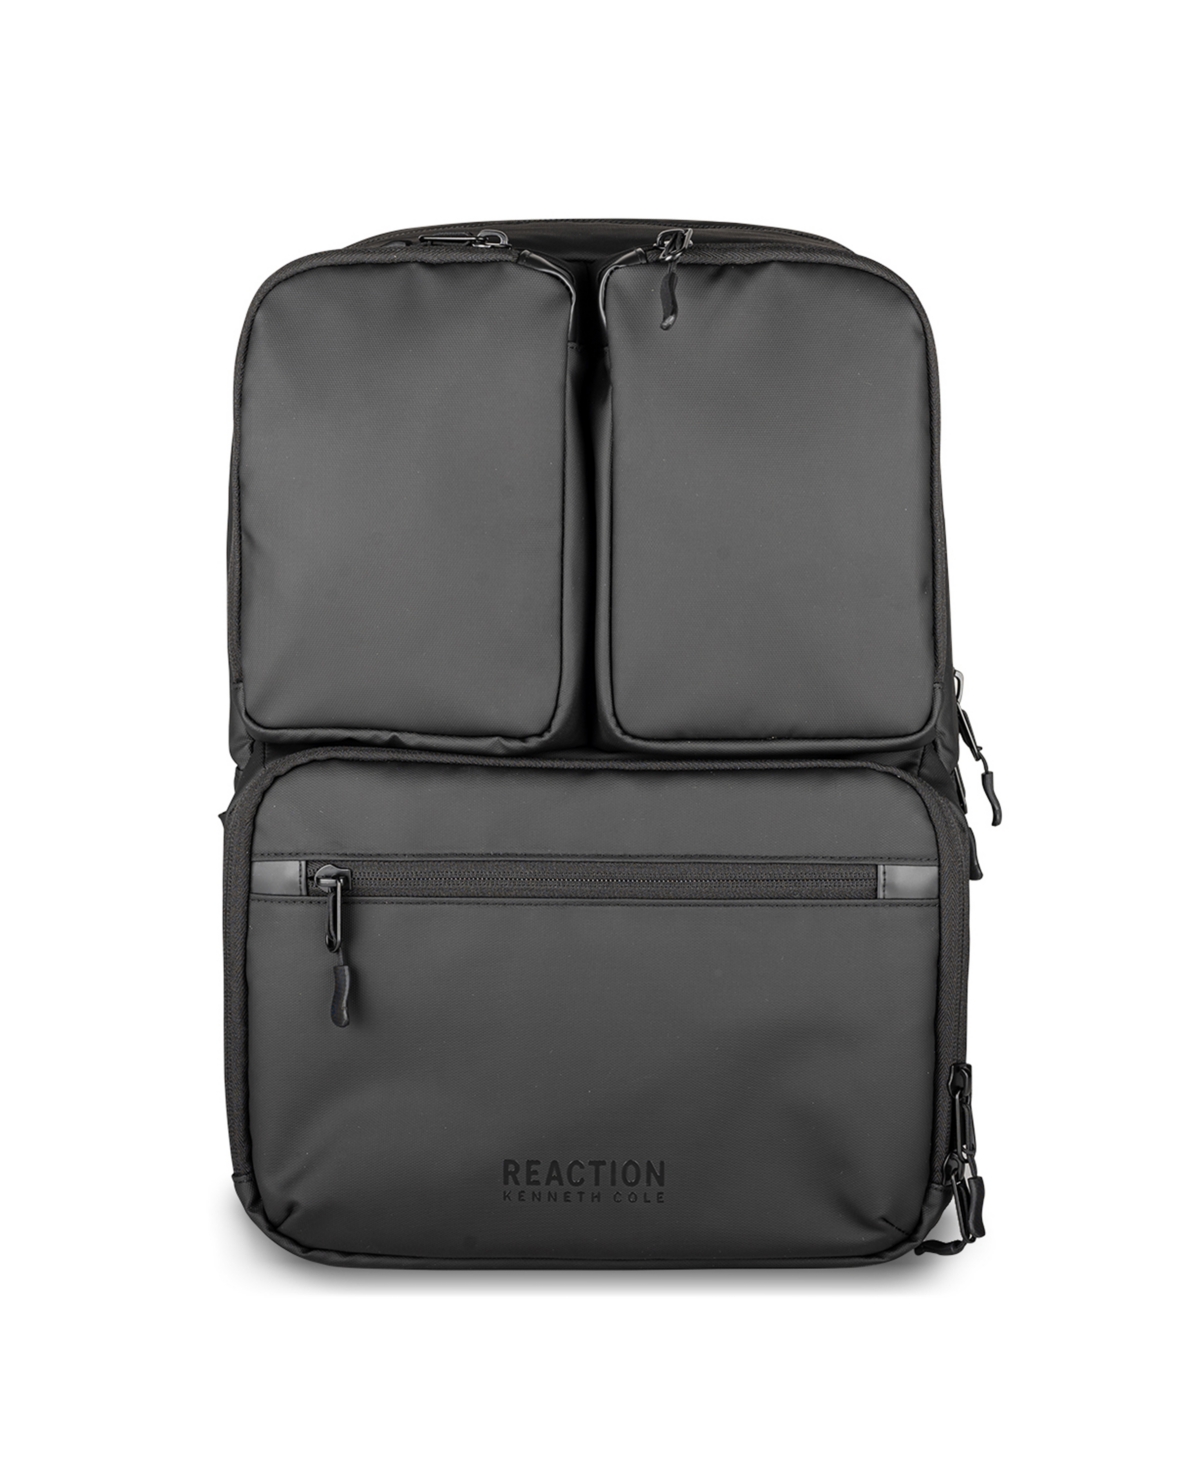 Ryder 17" Laptop Backpack with Removable Laptop Sleeve - Black